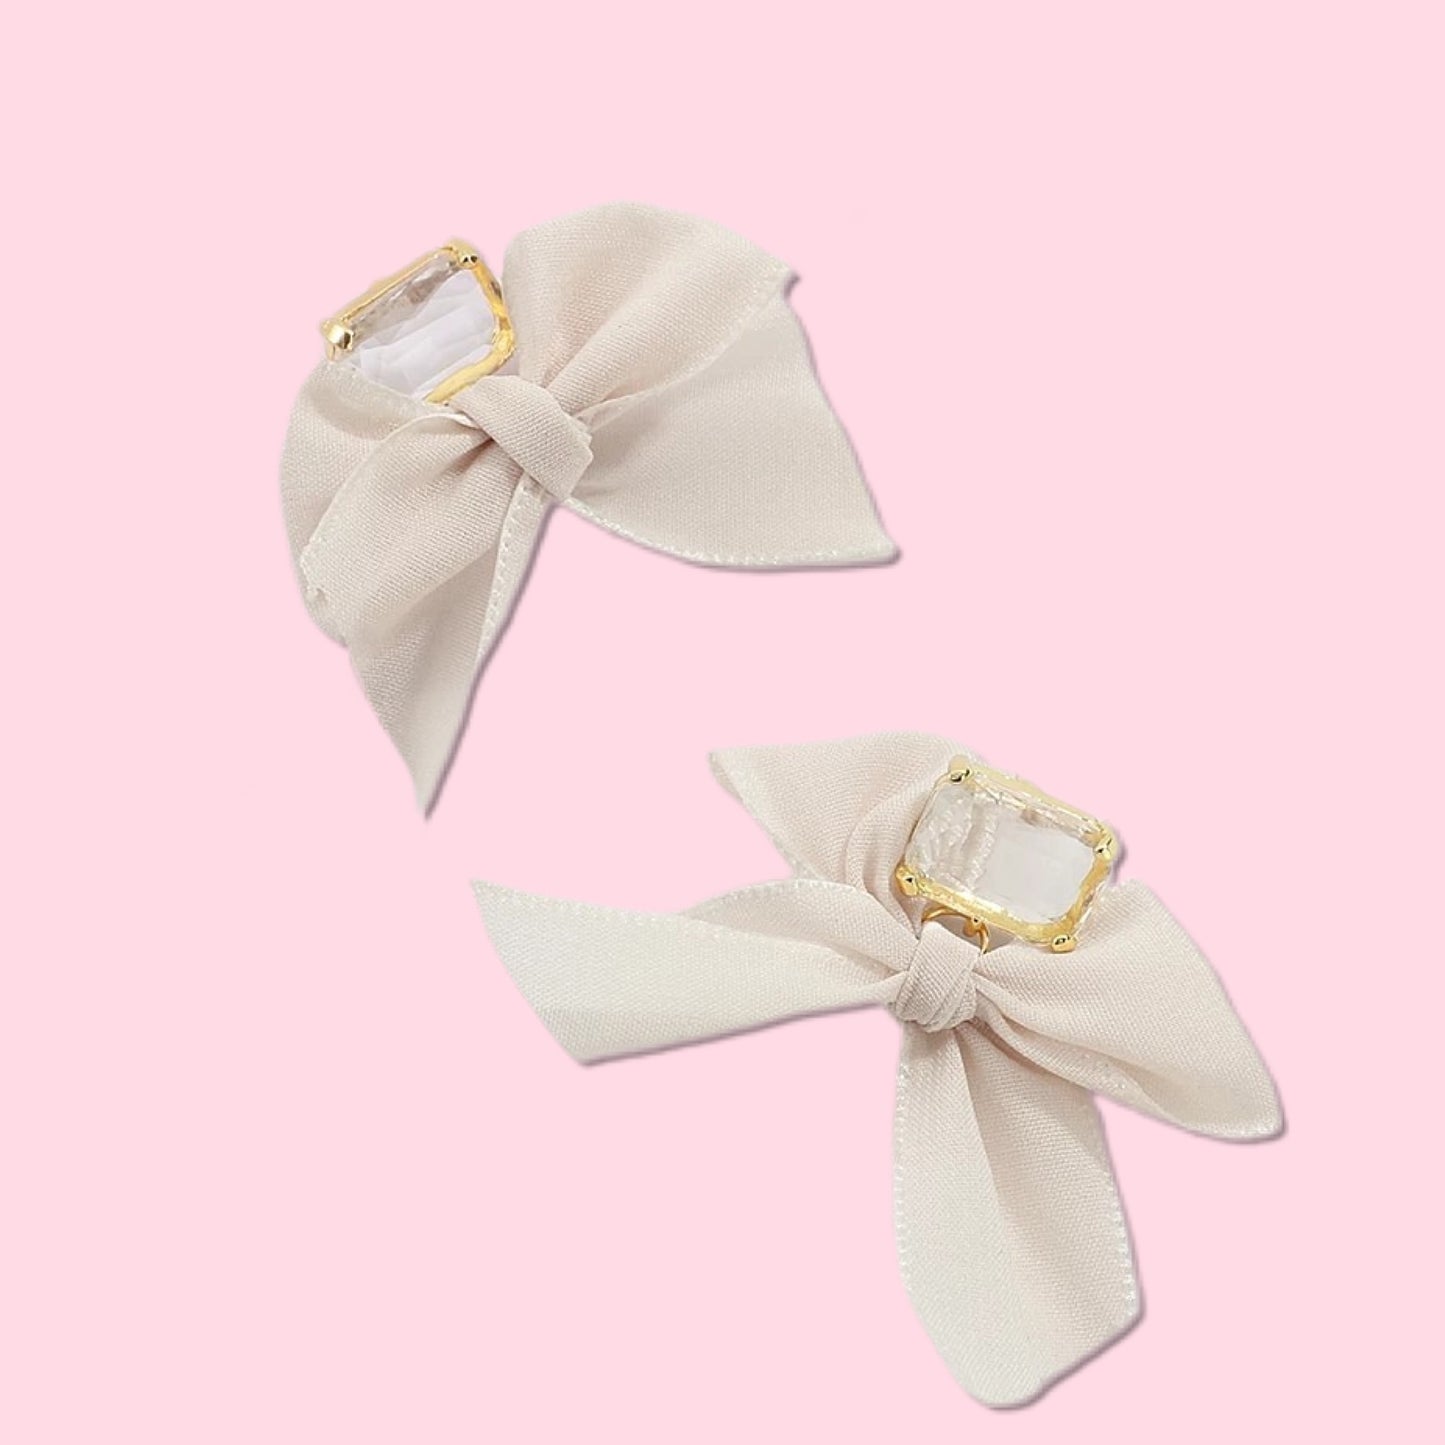 Romance Bow Earrings (color options)